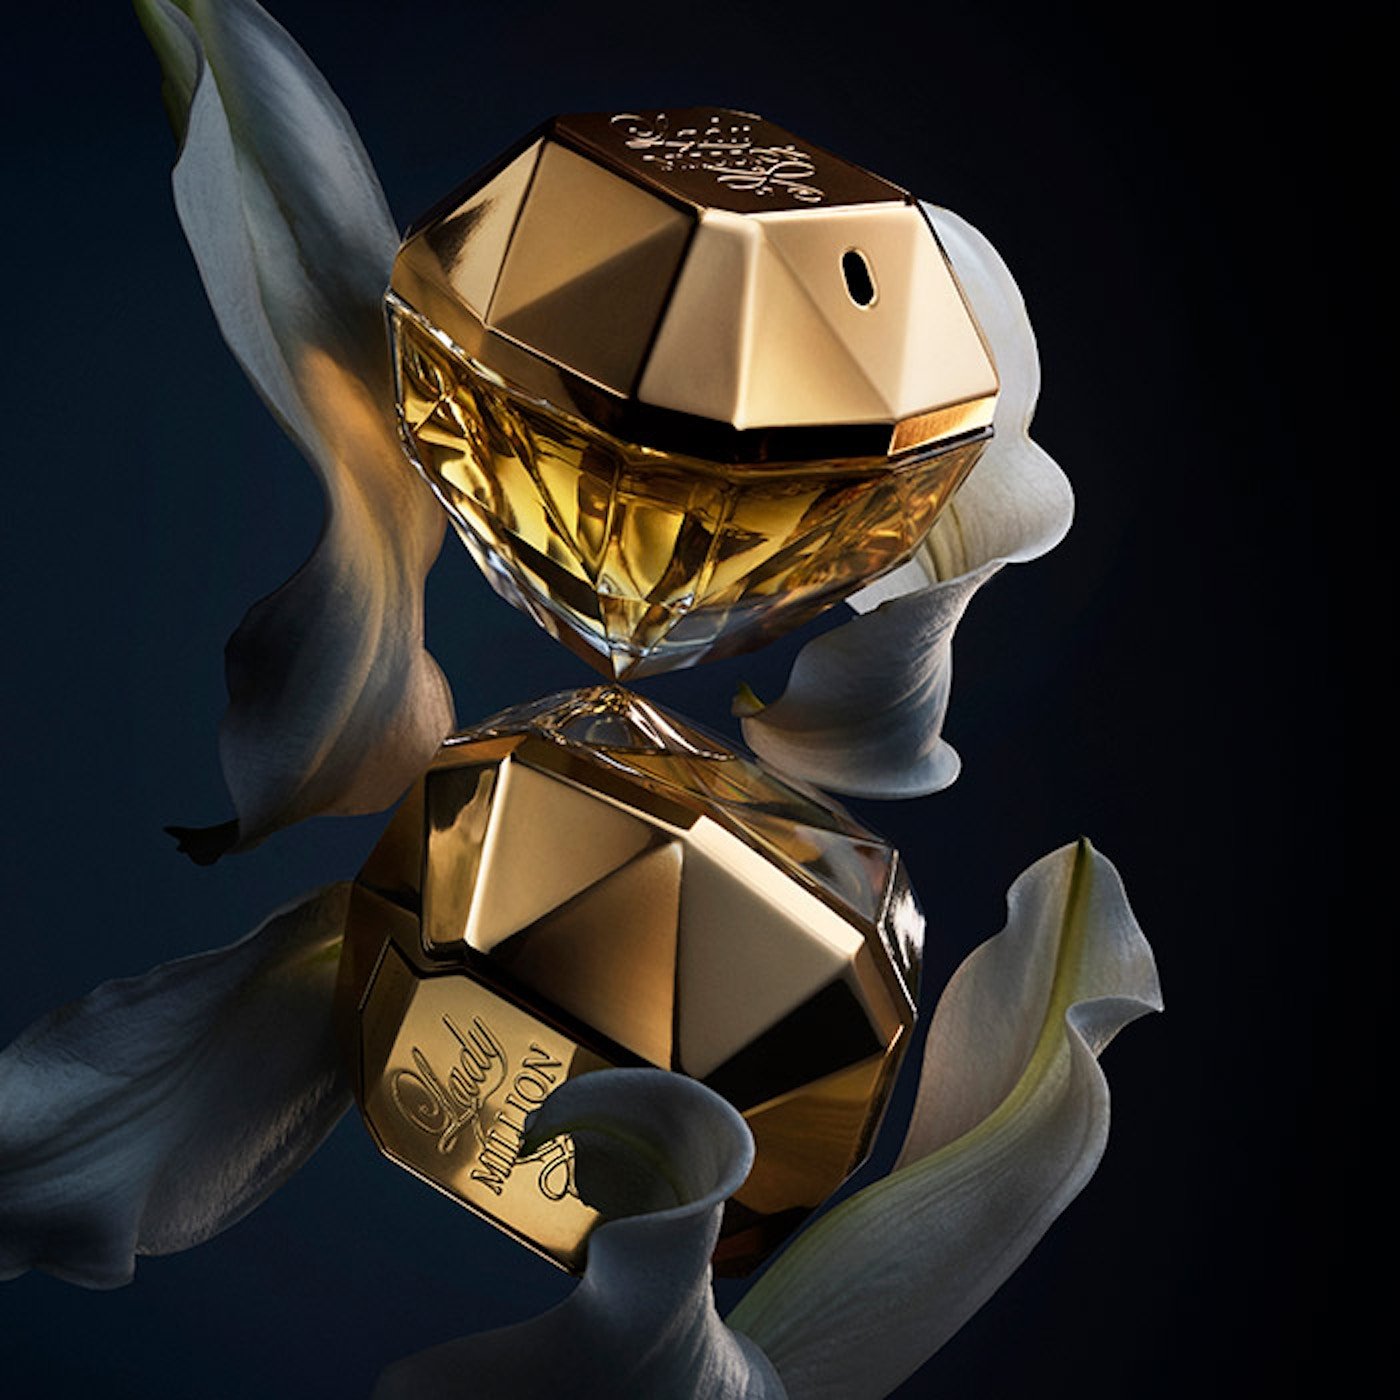 Paco Rabanne Lady Million EDP Lotion Set | My Perfume Shop Australia